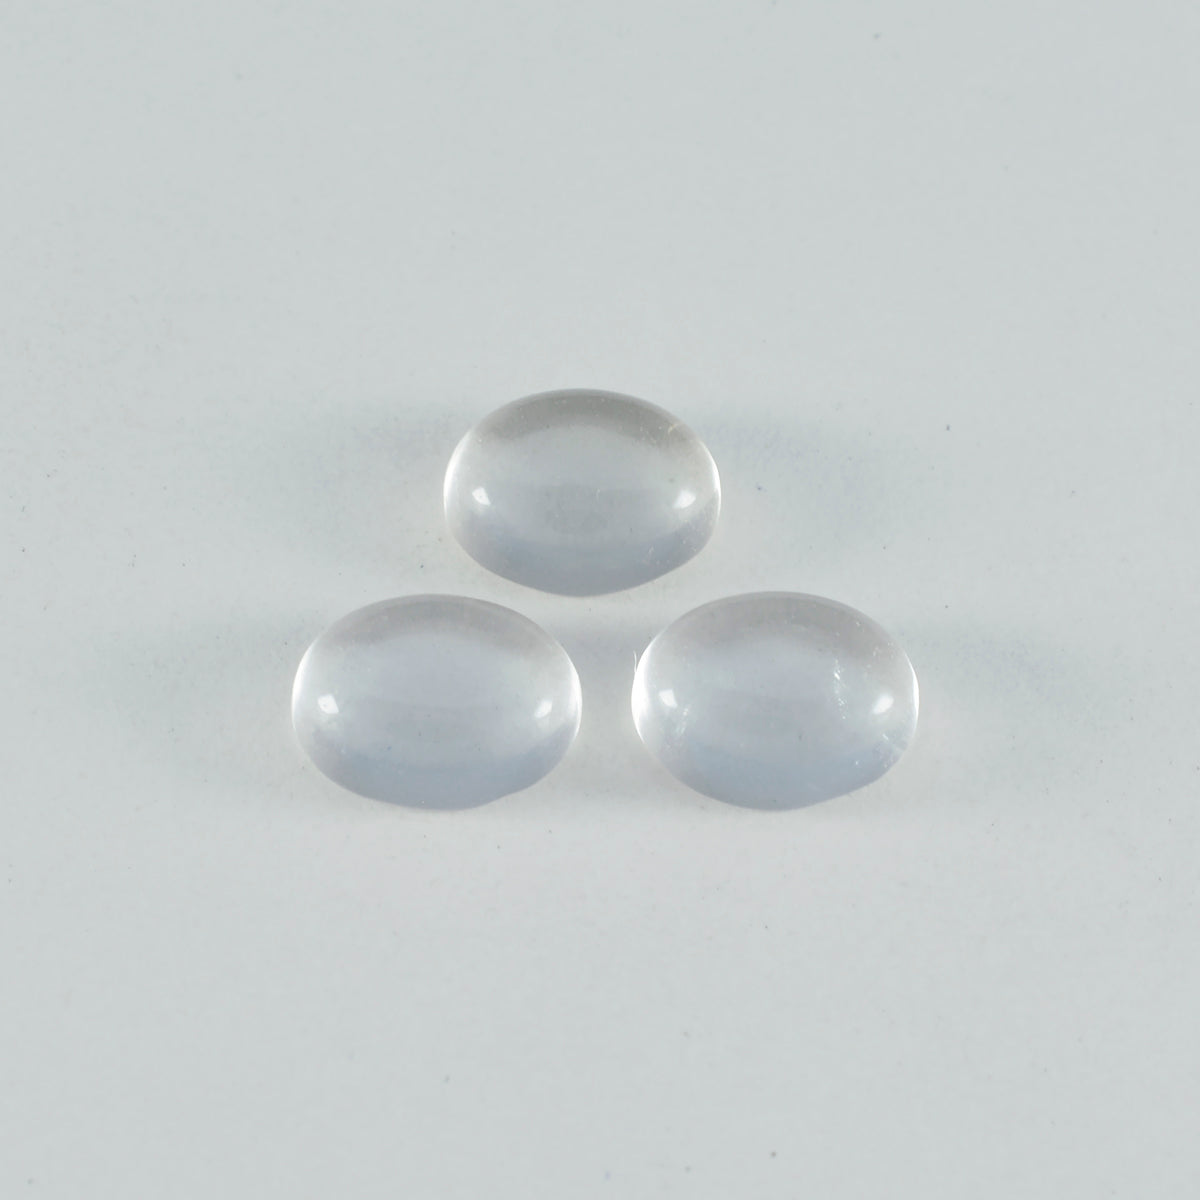 Riyogems 1PC White Crystal Quartz Cabochon 10x12 mm Oval Shape fantastic Quality Gemstone